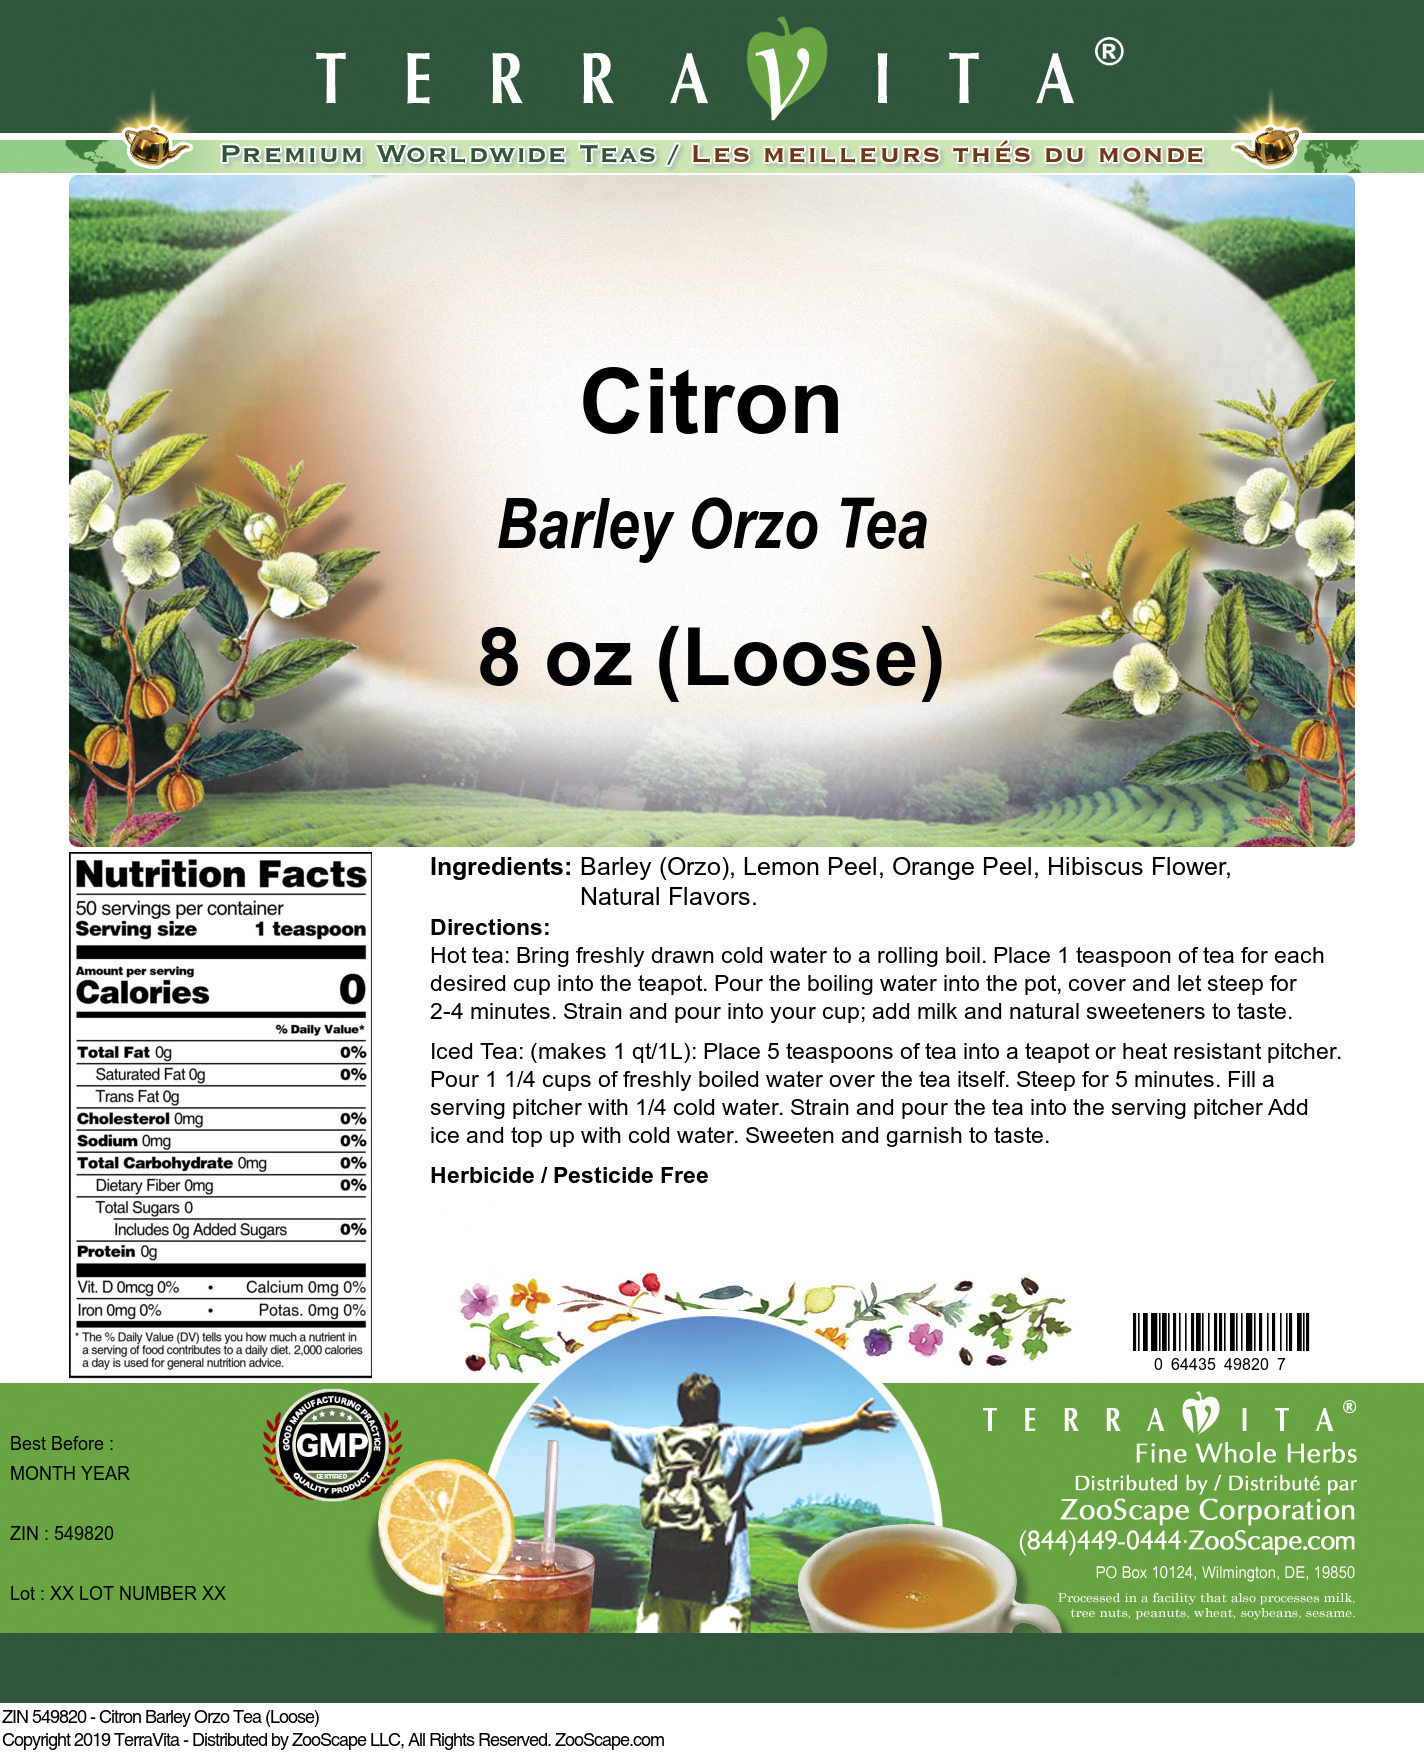 Citron Barley Orzo Tea (Loose) - Label